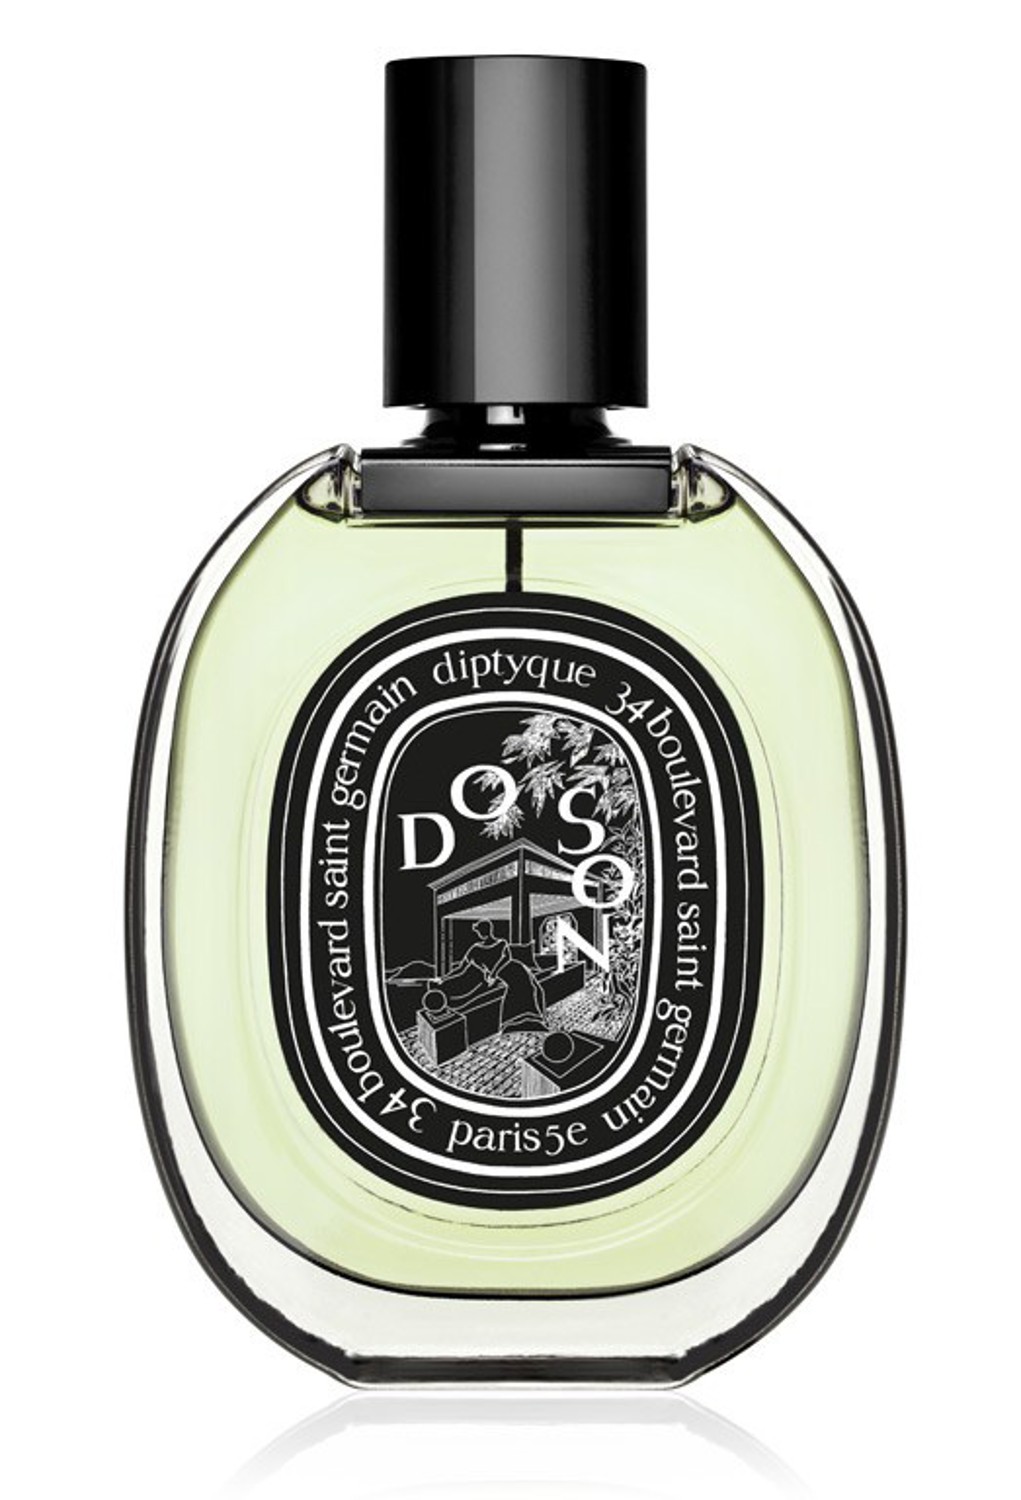 shop Diptyque  Profumi: Do Son Eau de perfum (edt 75). Foglie d'arancio, tuberosa, pepe rosa, muschio . number 832